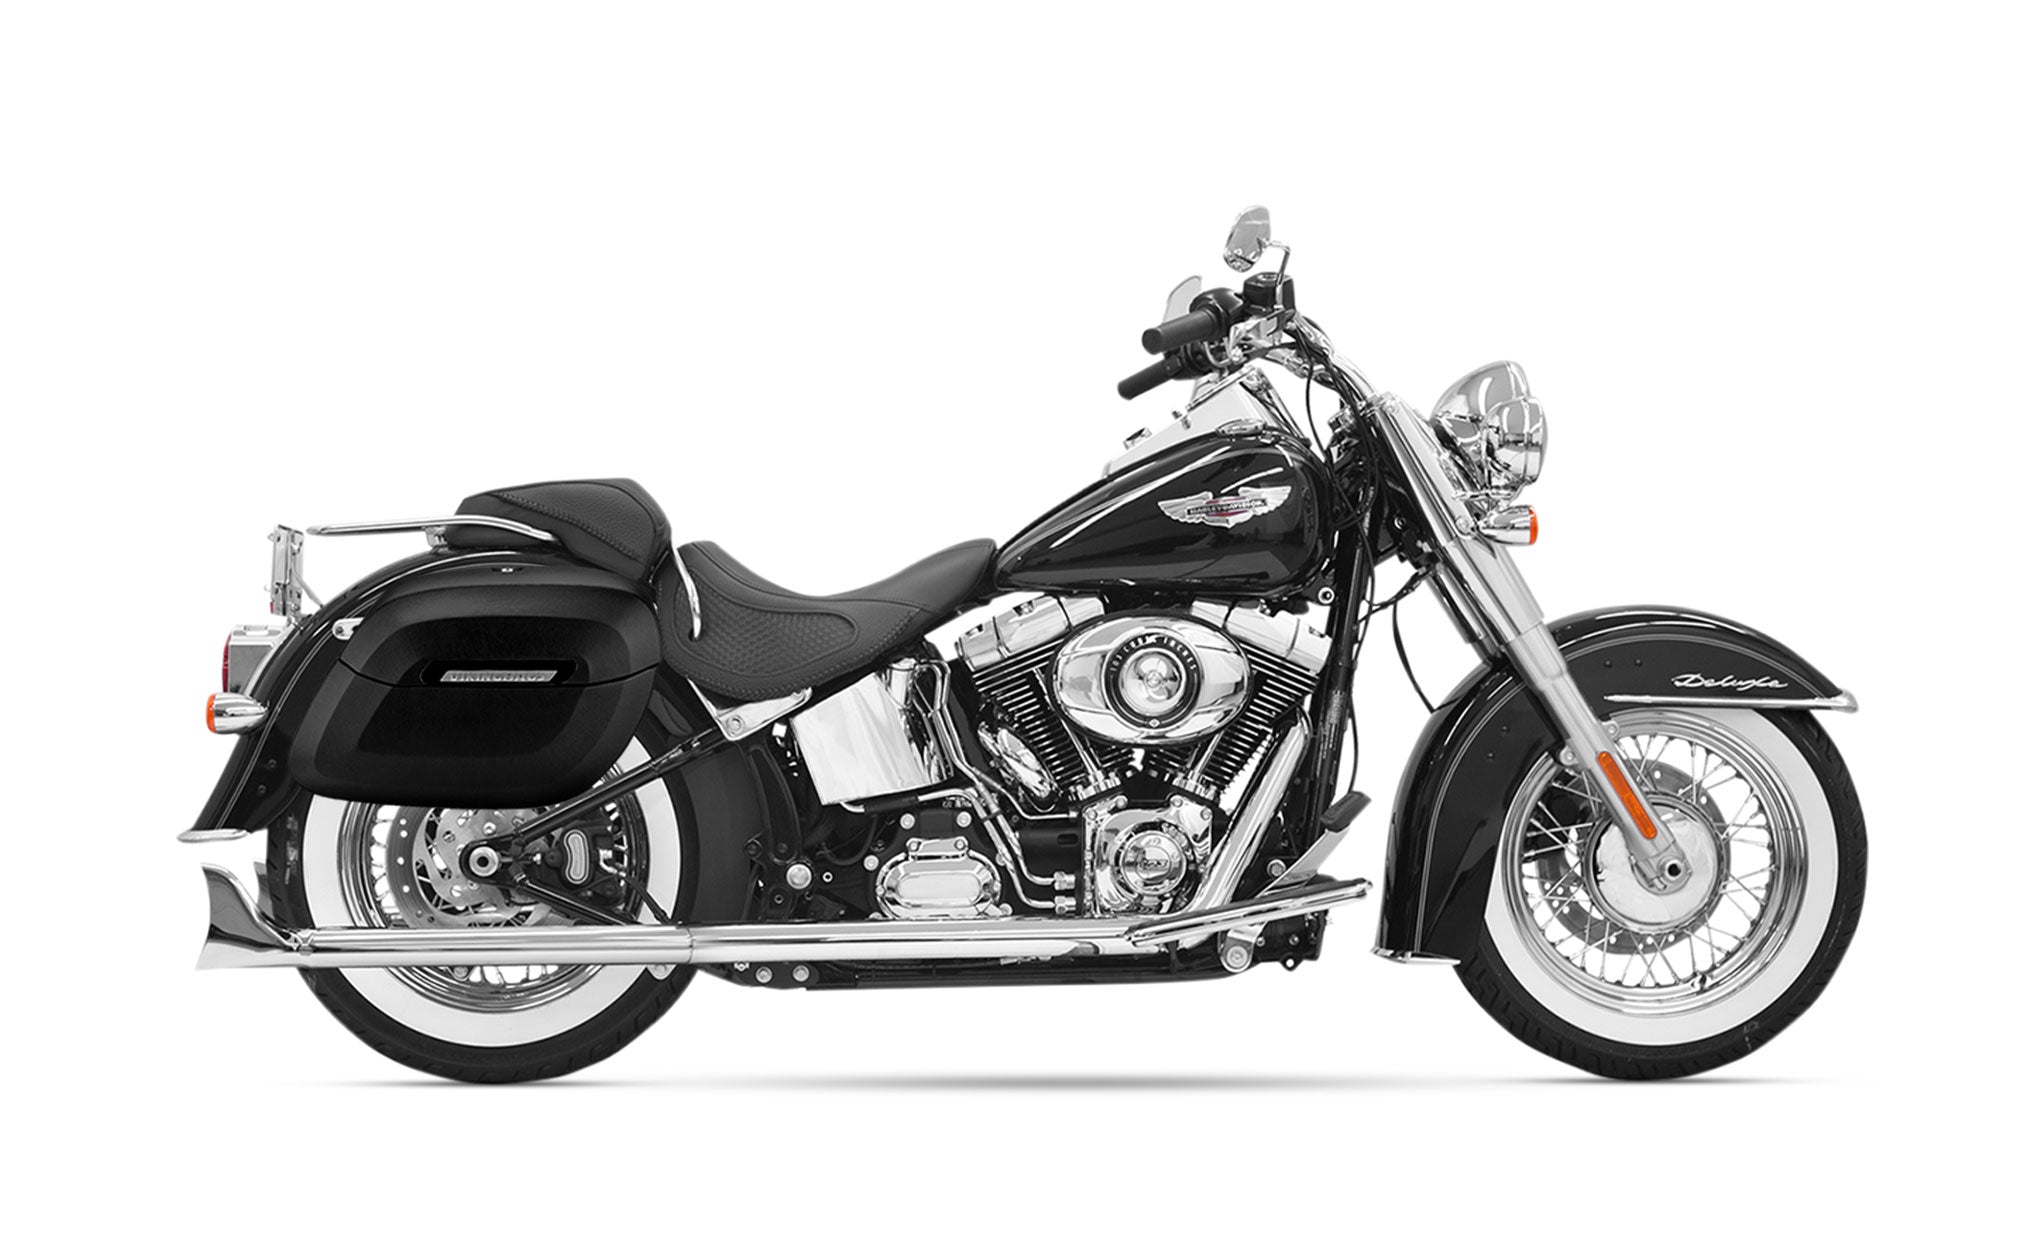 40L - Lamellar Raven Extra Large Leather Covered Motorcycle Hard Saddlebags for Harley Softail Heritage FLSTICCI on Bike Photo @expand